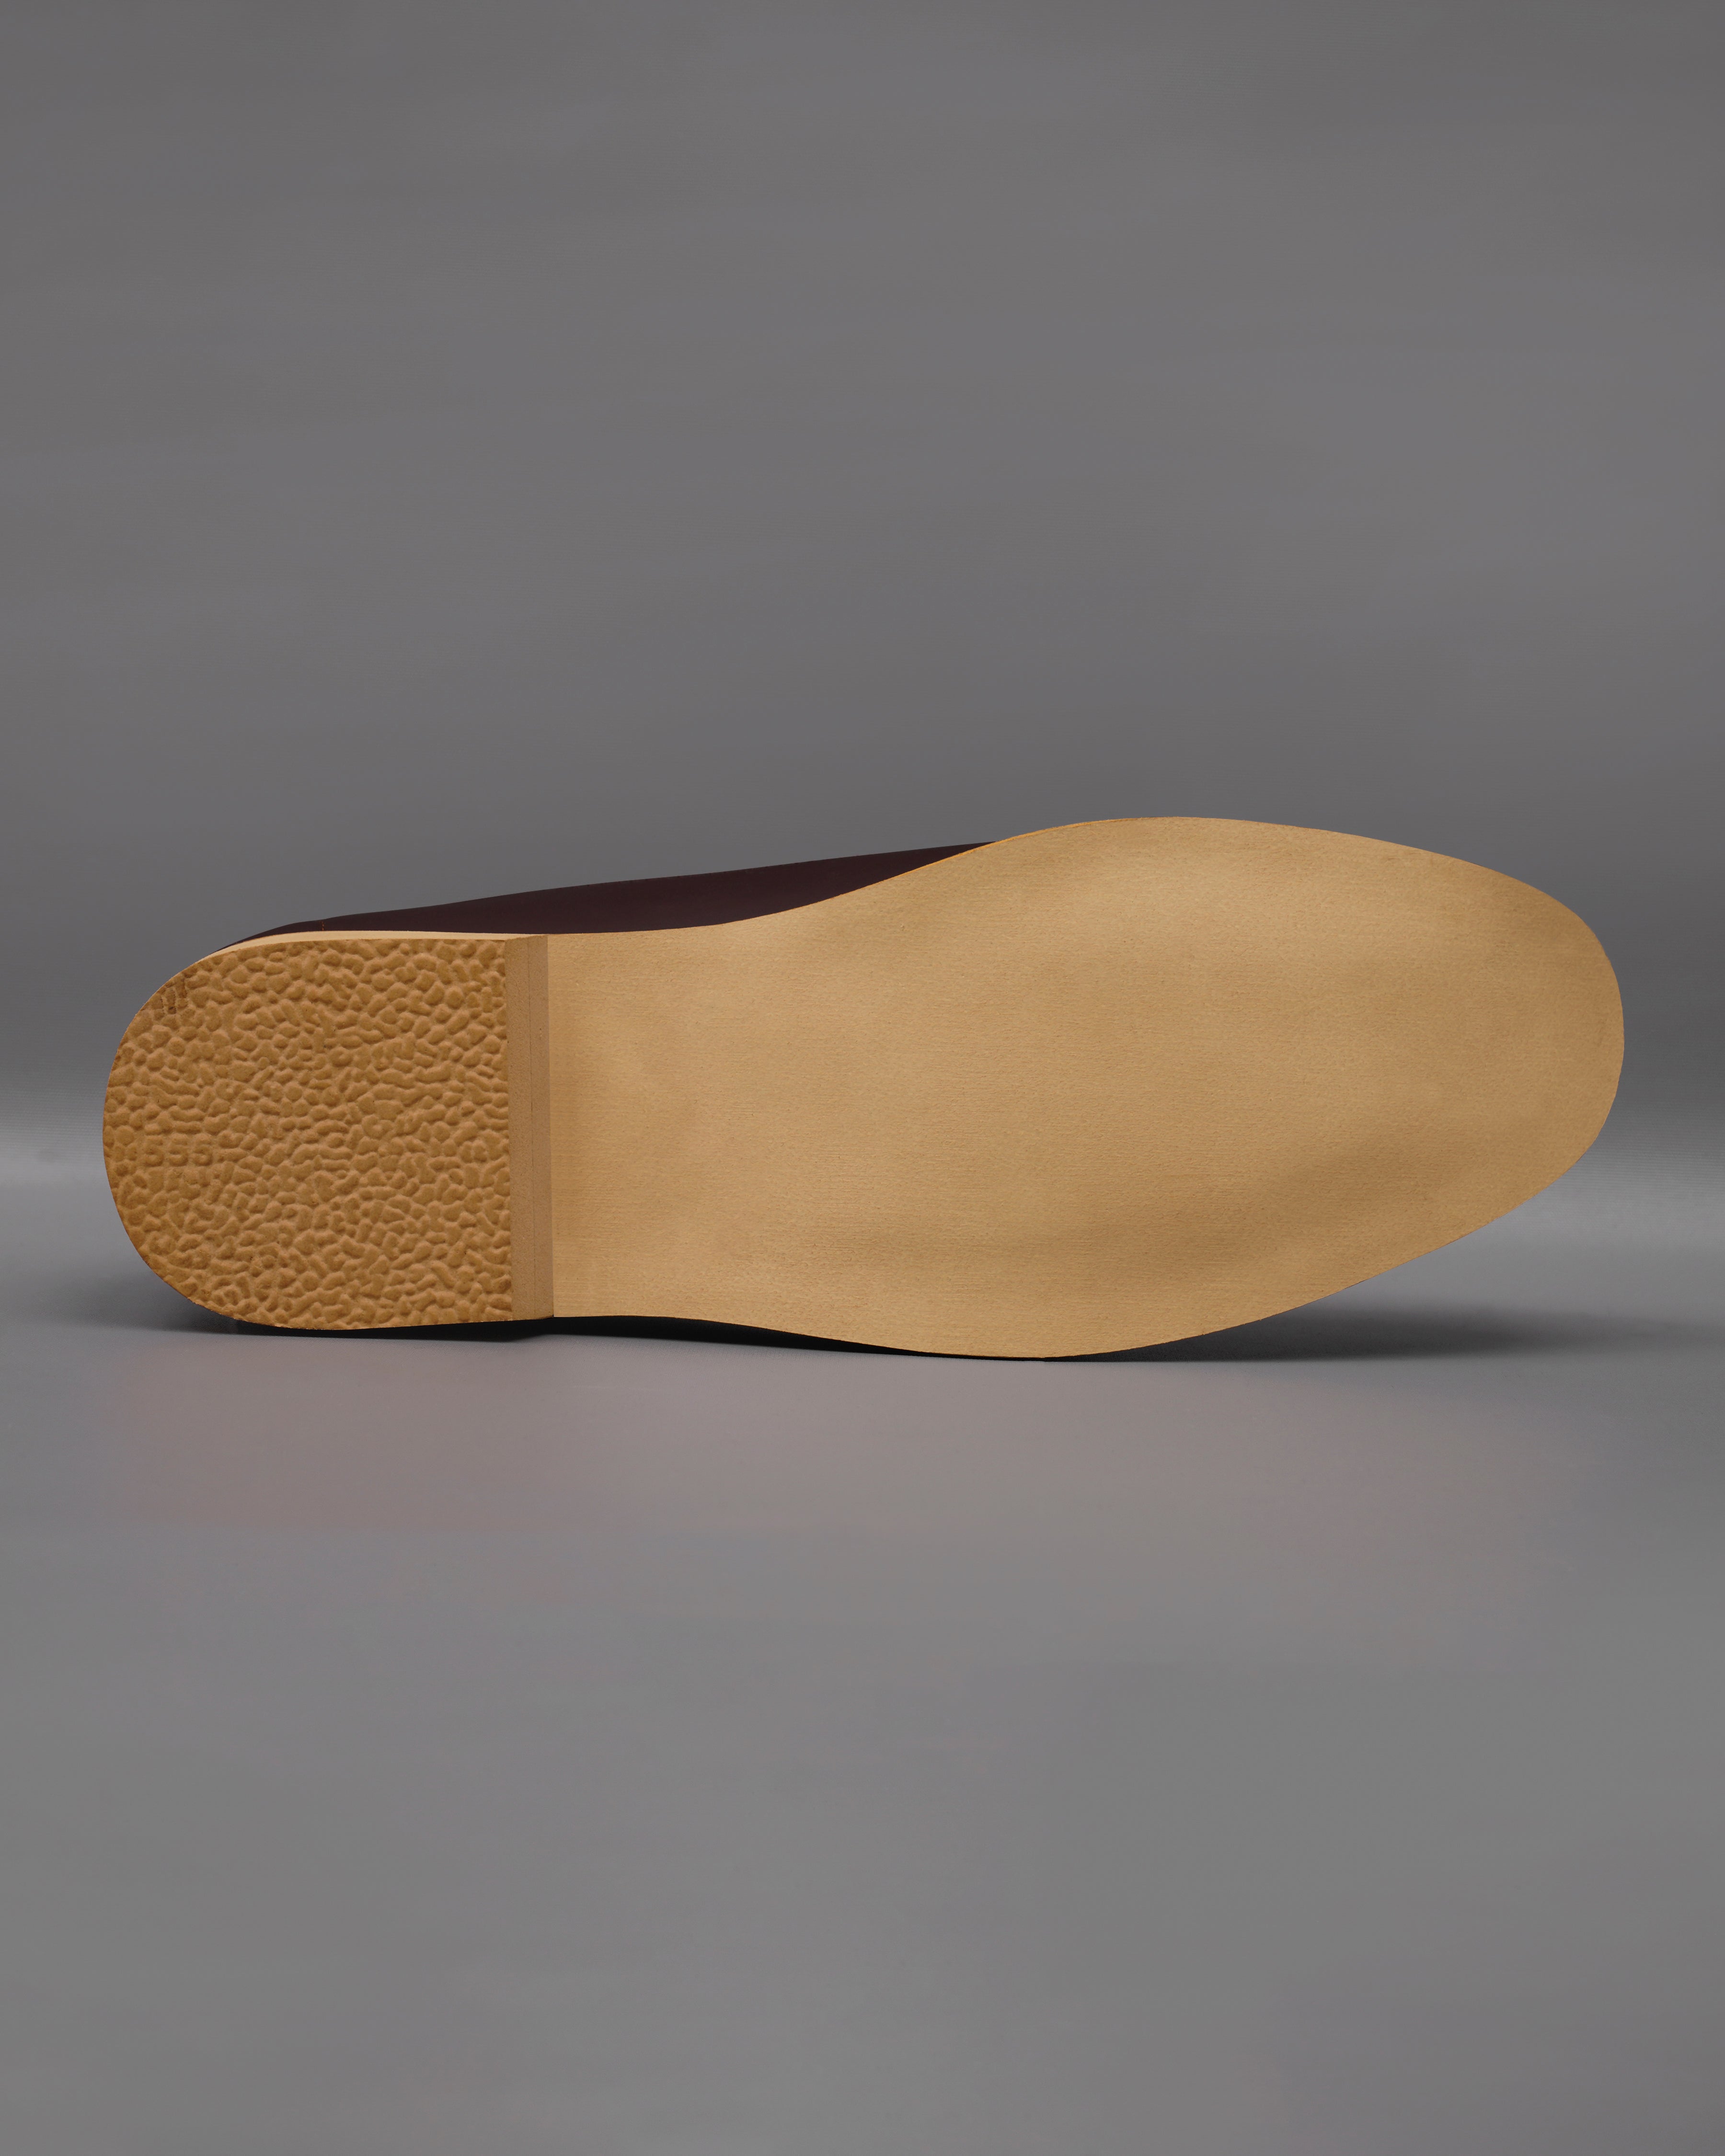 Dark Brown Golden Zardosi Vegan Leather Hand stitched Slip-On Shoes FT100-6, FT100-7, FT100-8, FT100-9, FT100-10, FT100-11